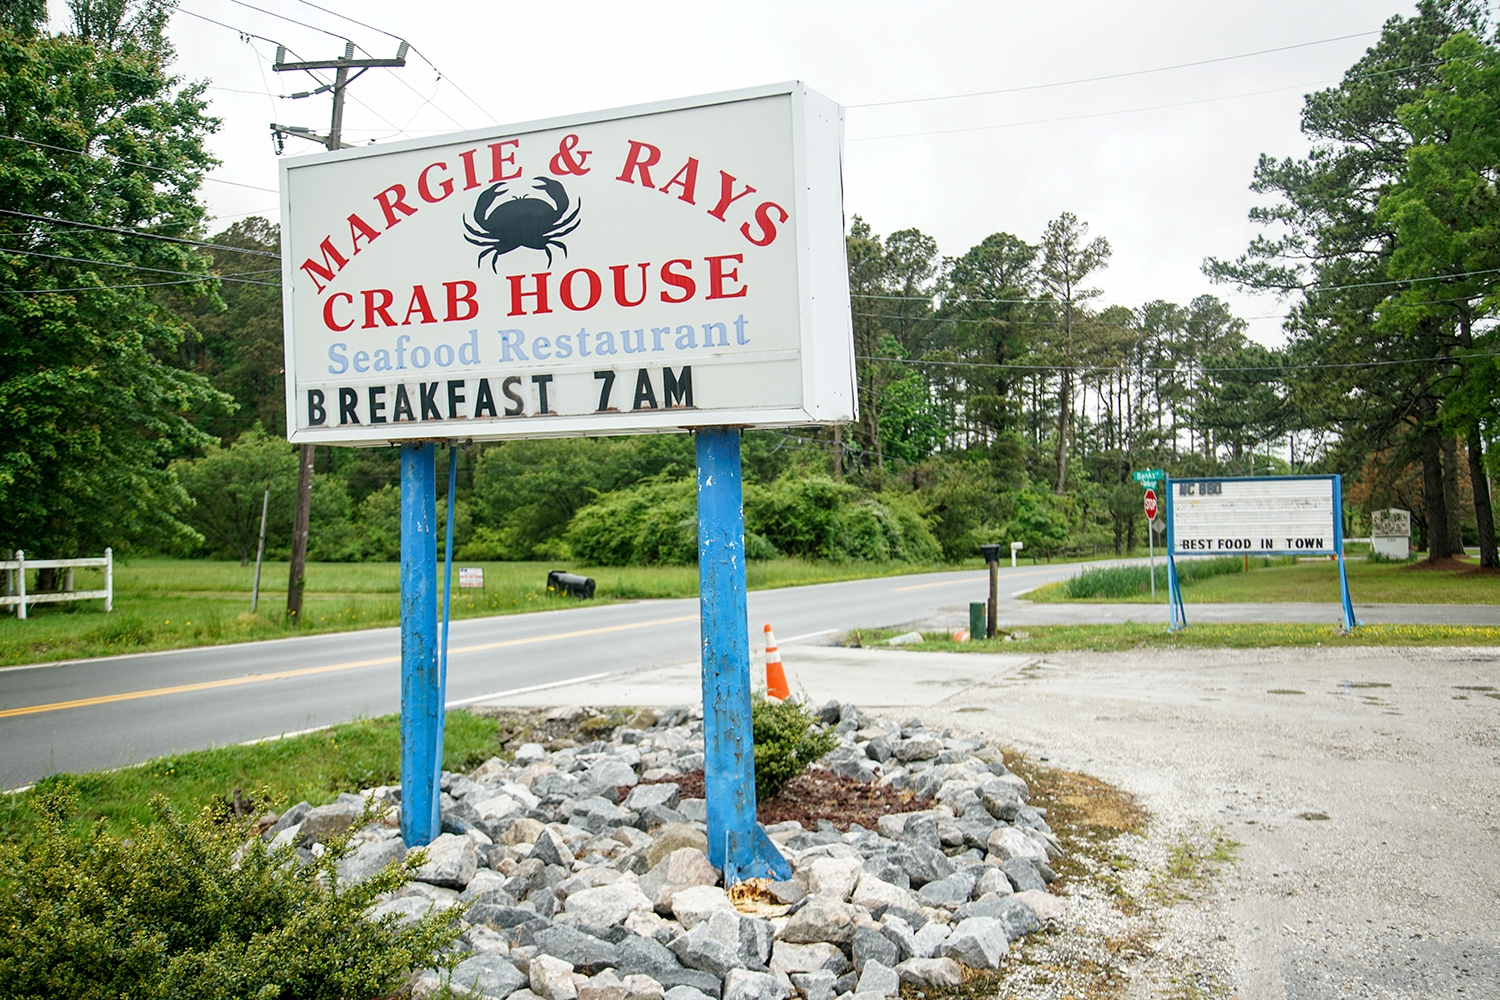 Margie & Rays Crab House Restaurant, Virginia Beach, Virginia